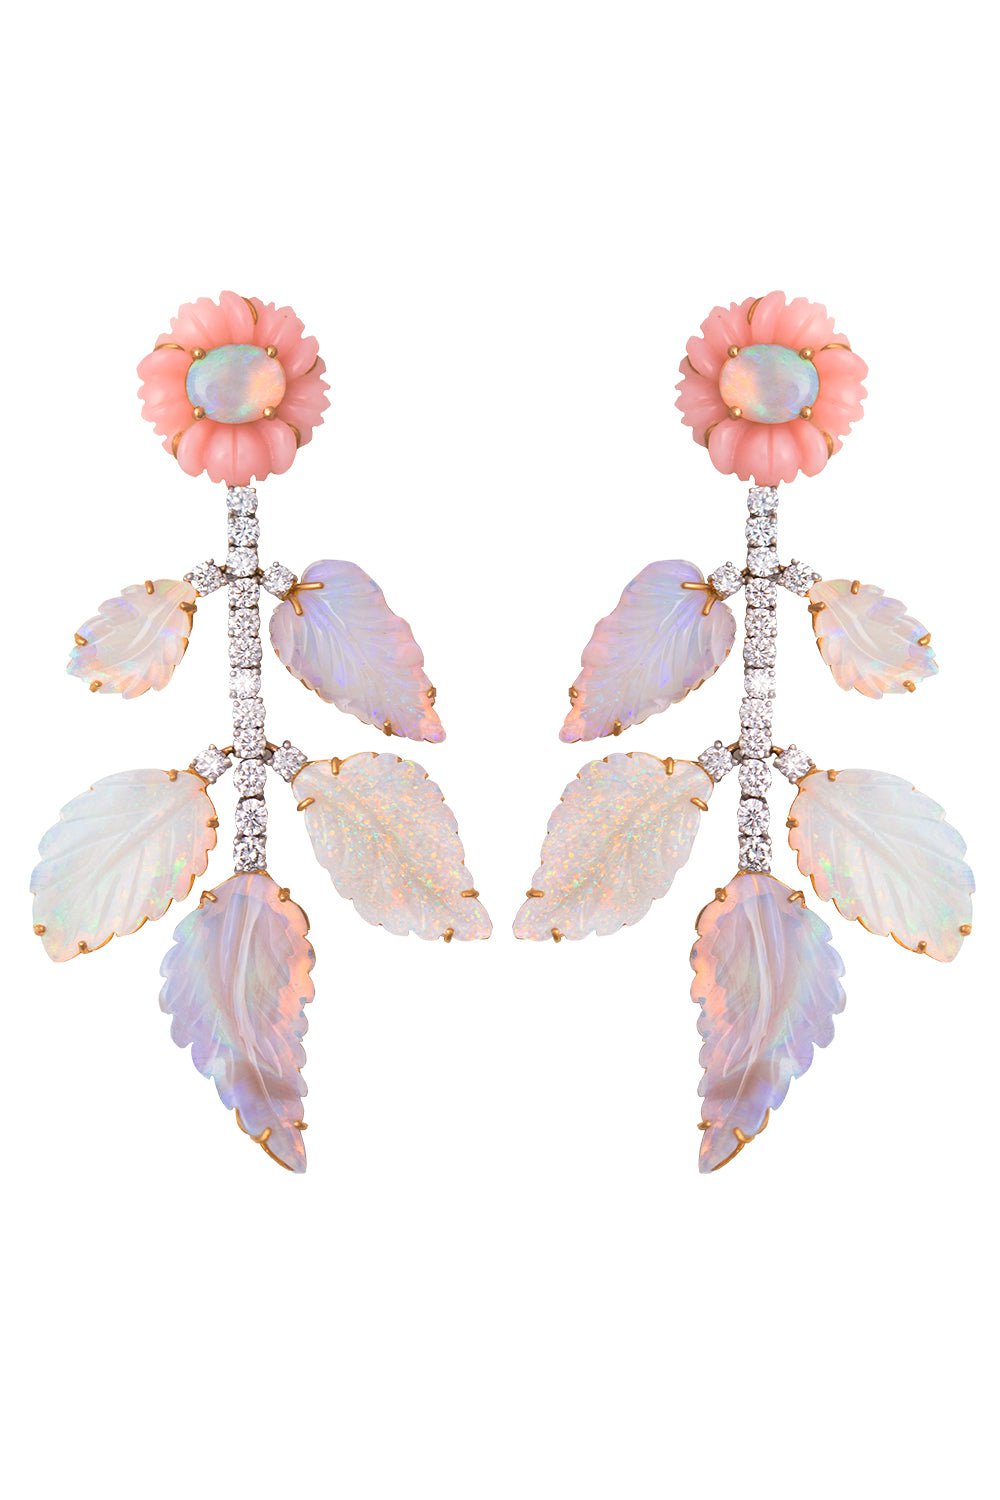 IRENE NEUWIRTH JEWELRY-Carved Pink Opal Leaf Earrings-ROSE GOLD